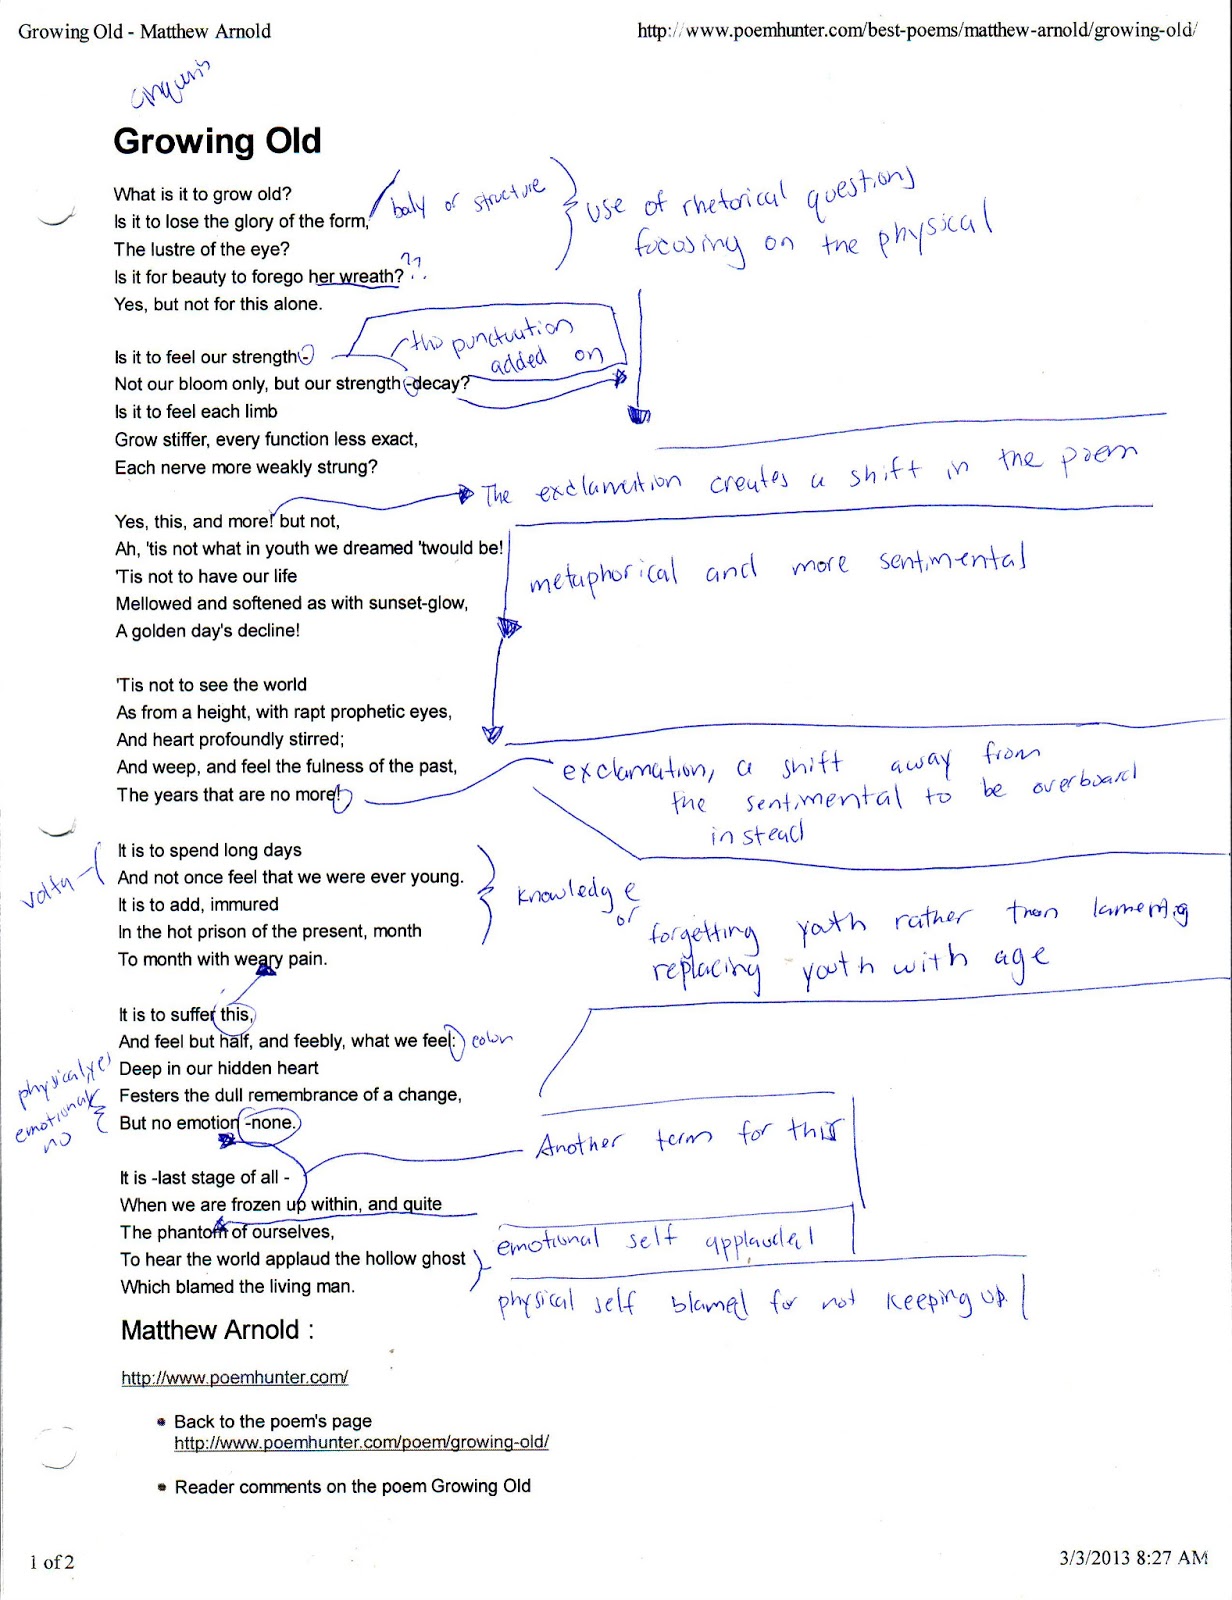 analysis of the poem